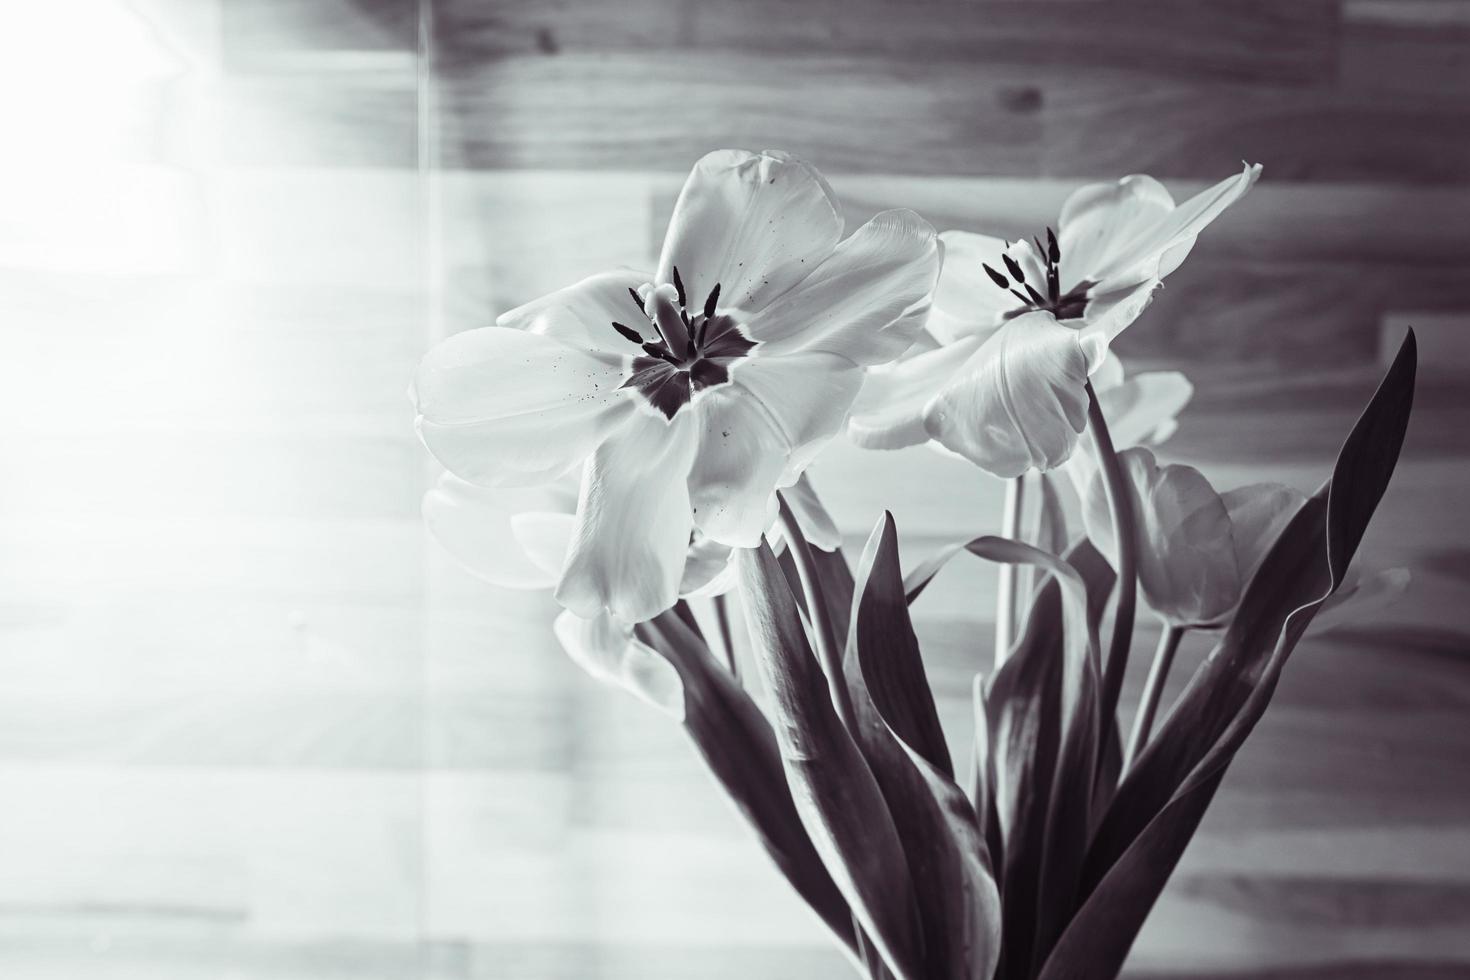 macro close-up vista de tulipas com pétalas abertas foto